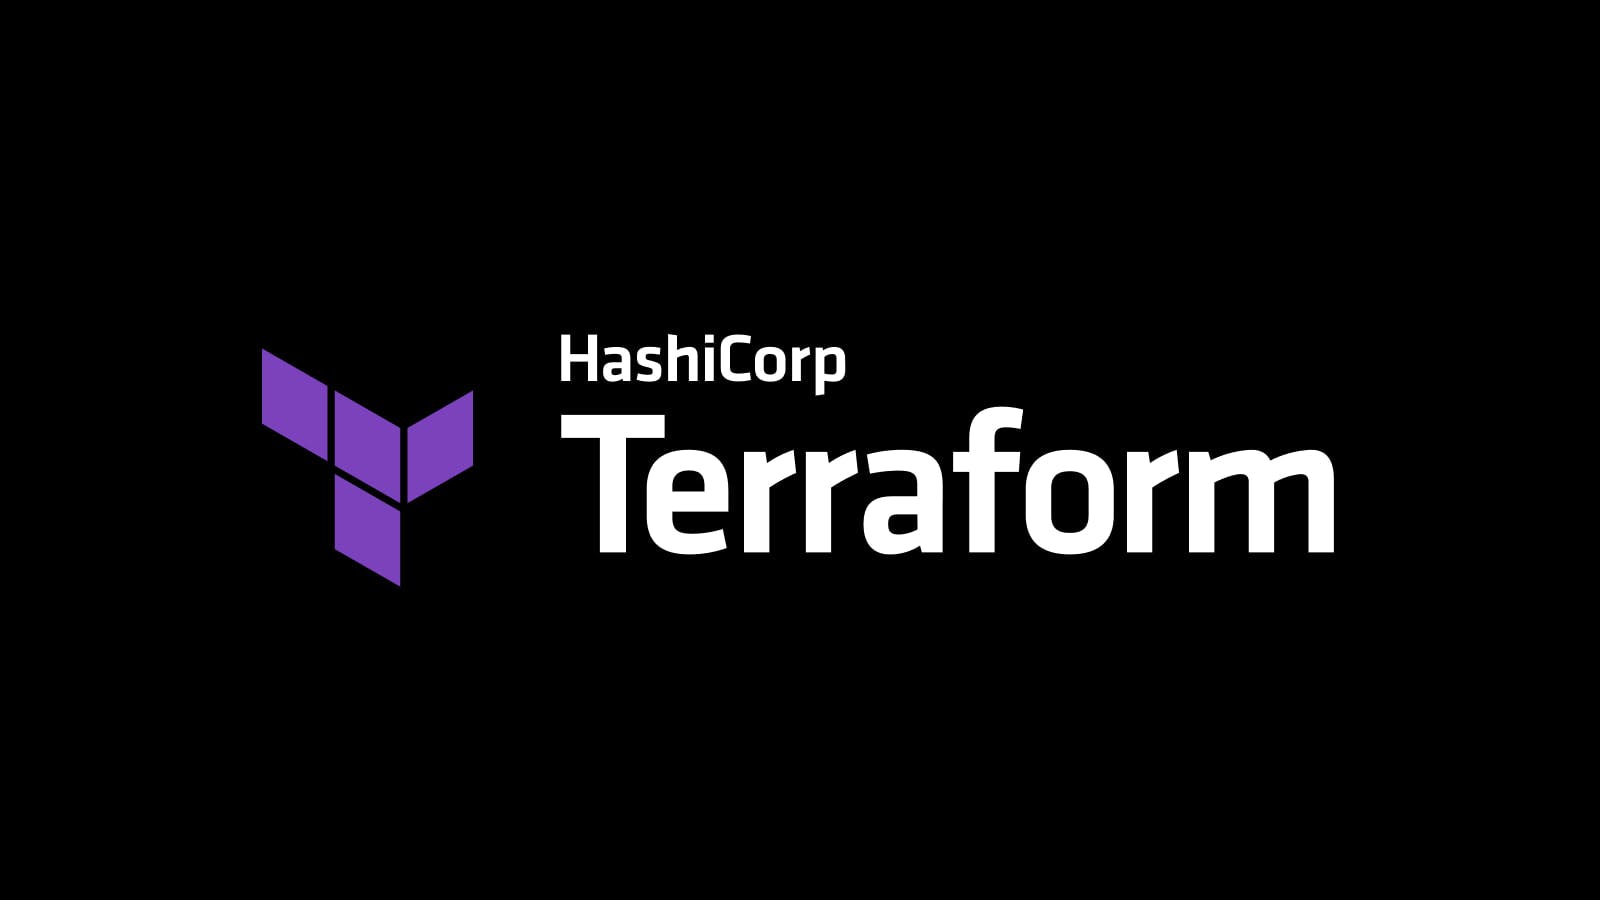 Terraform Enterprise adds new flexible deployment options